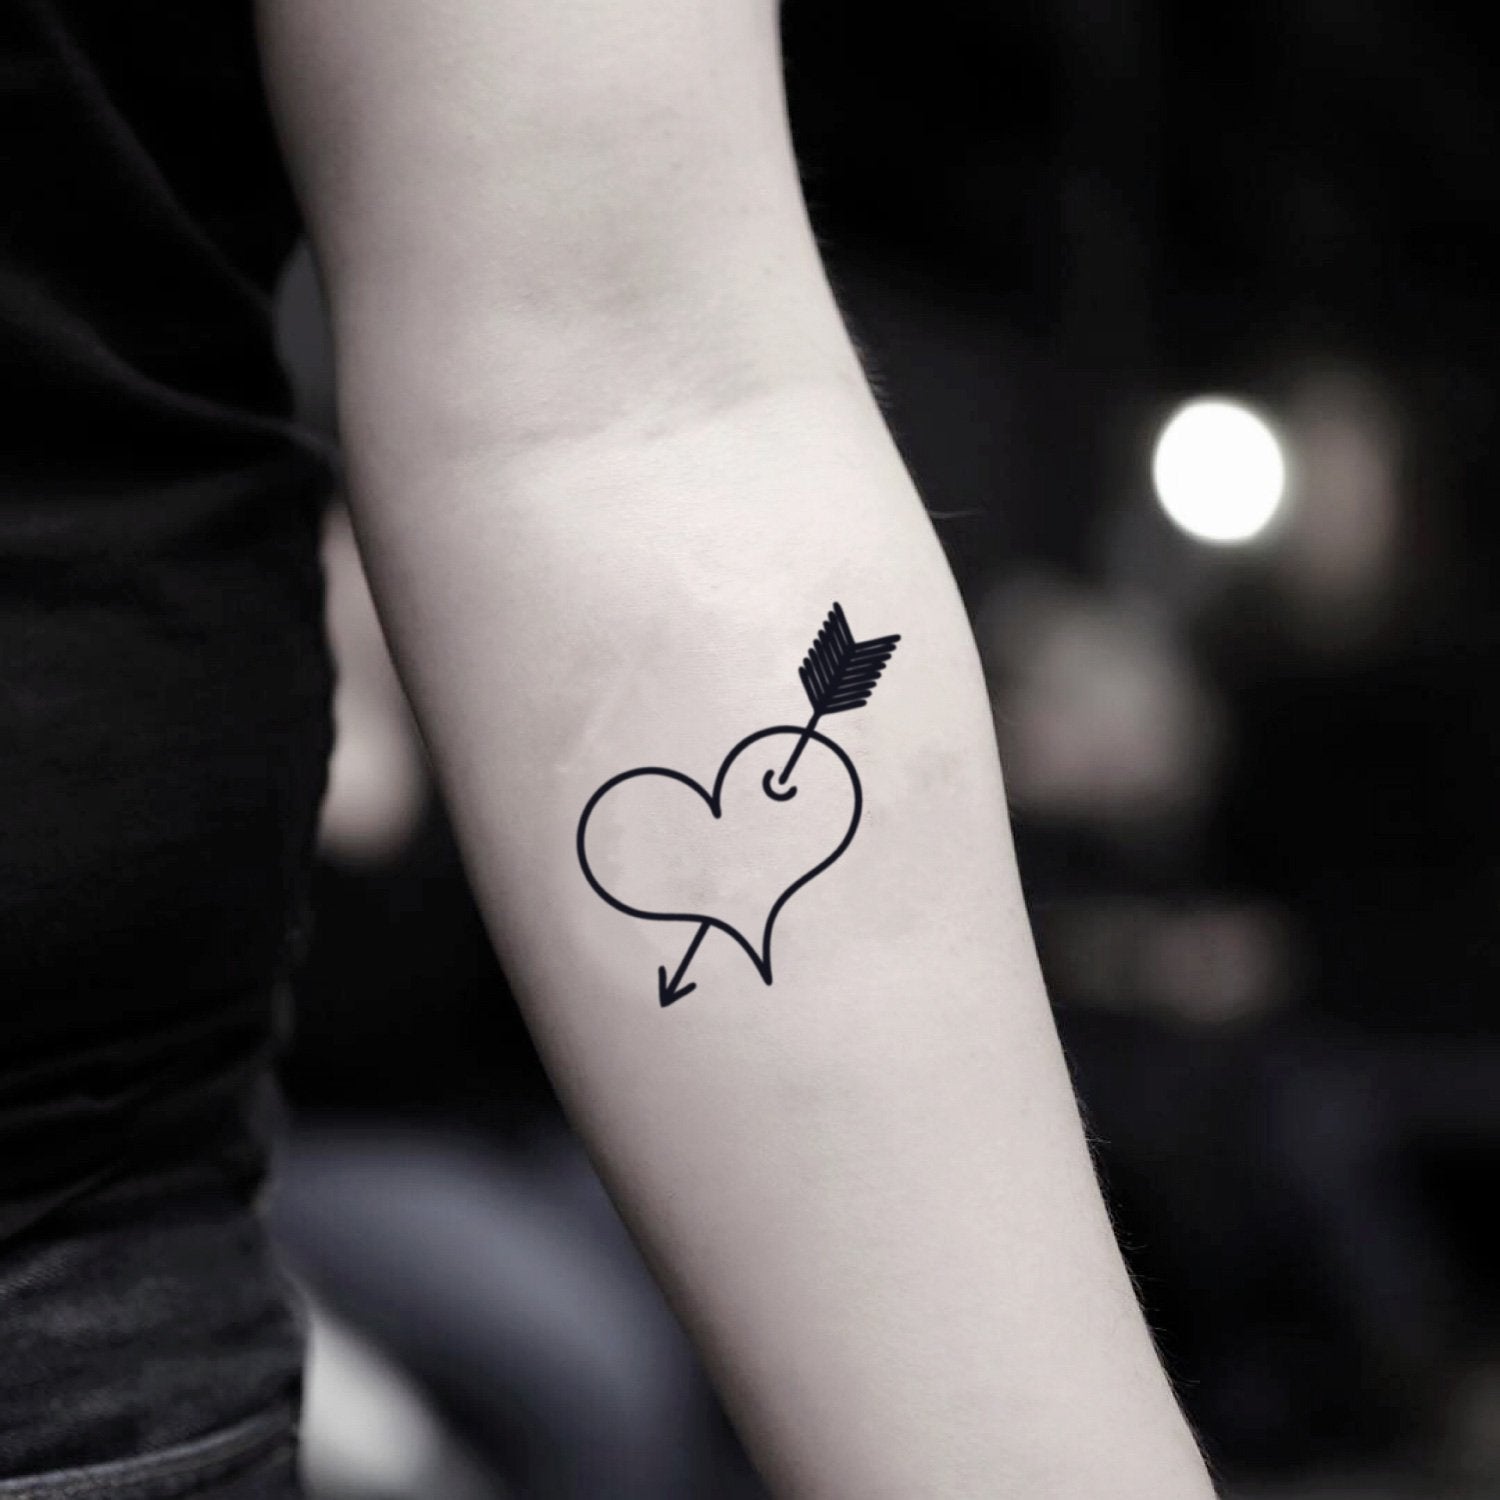 fake small heart and arrow minimalist temporary tattoo sticker design idea on inner arm